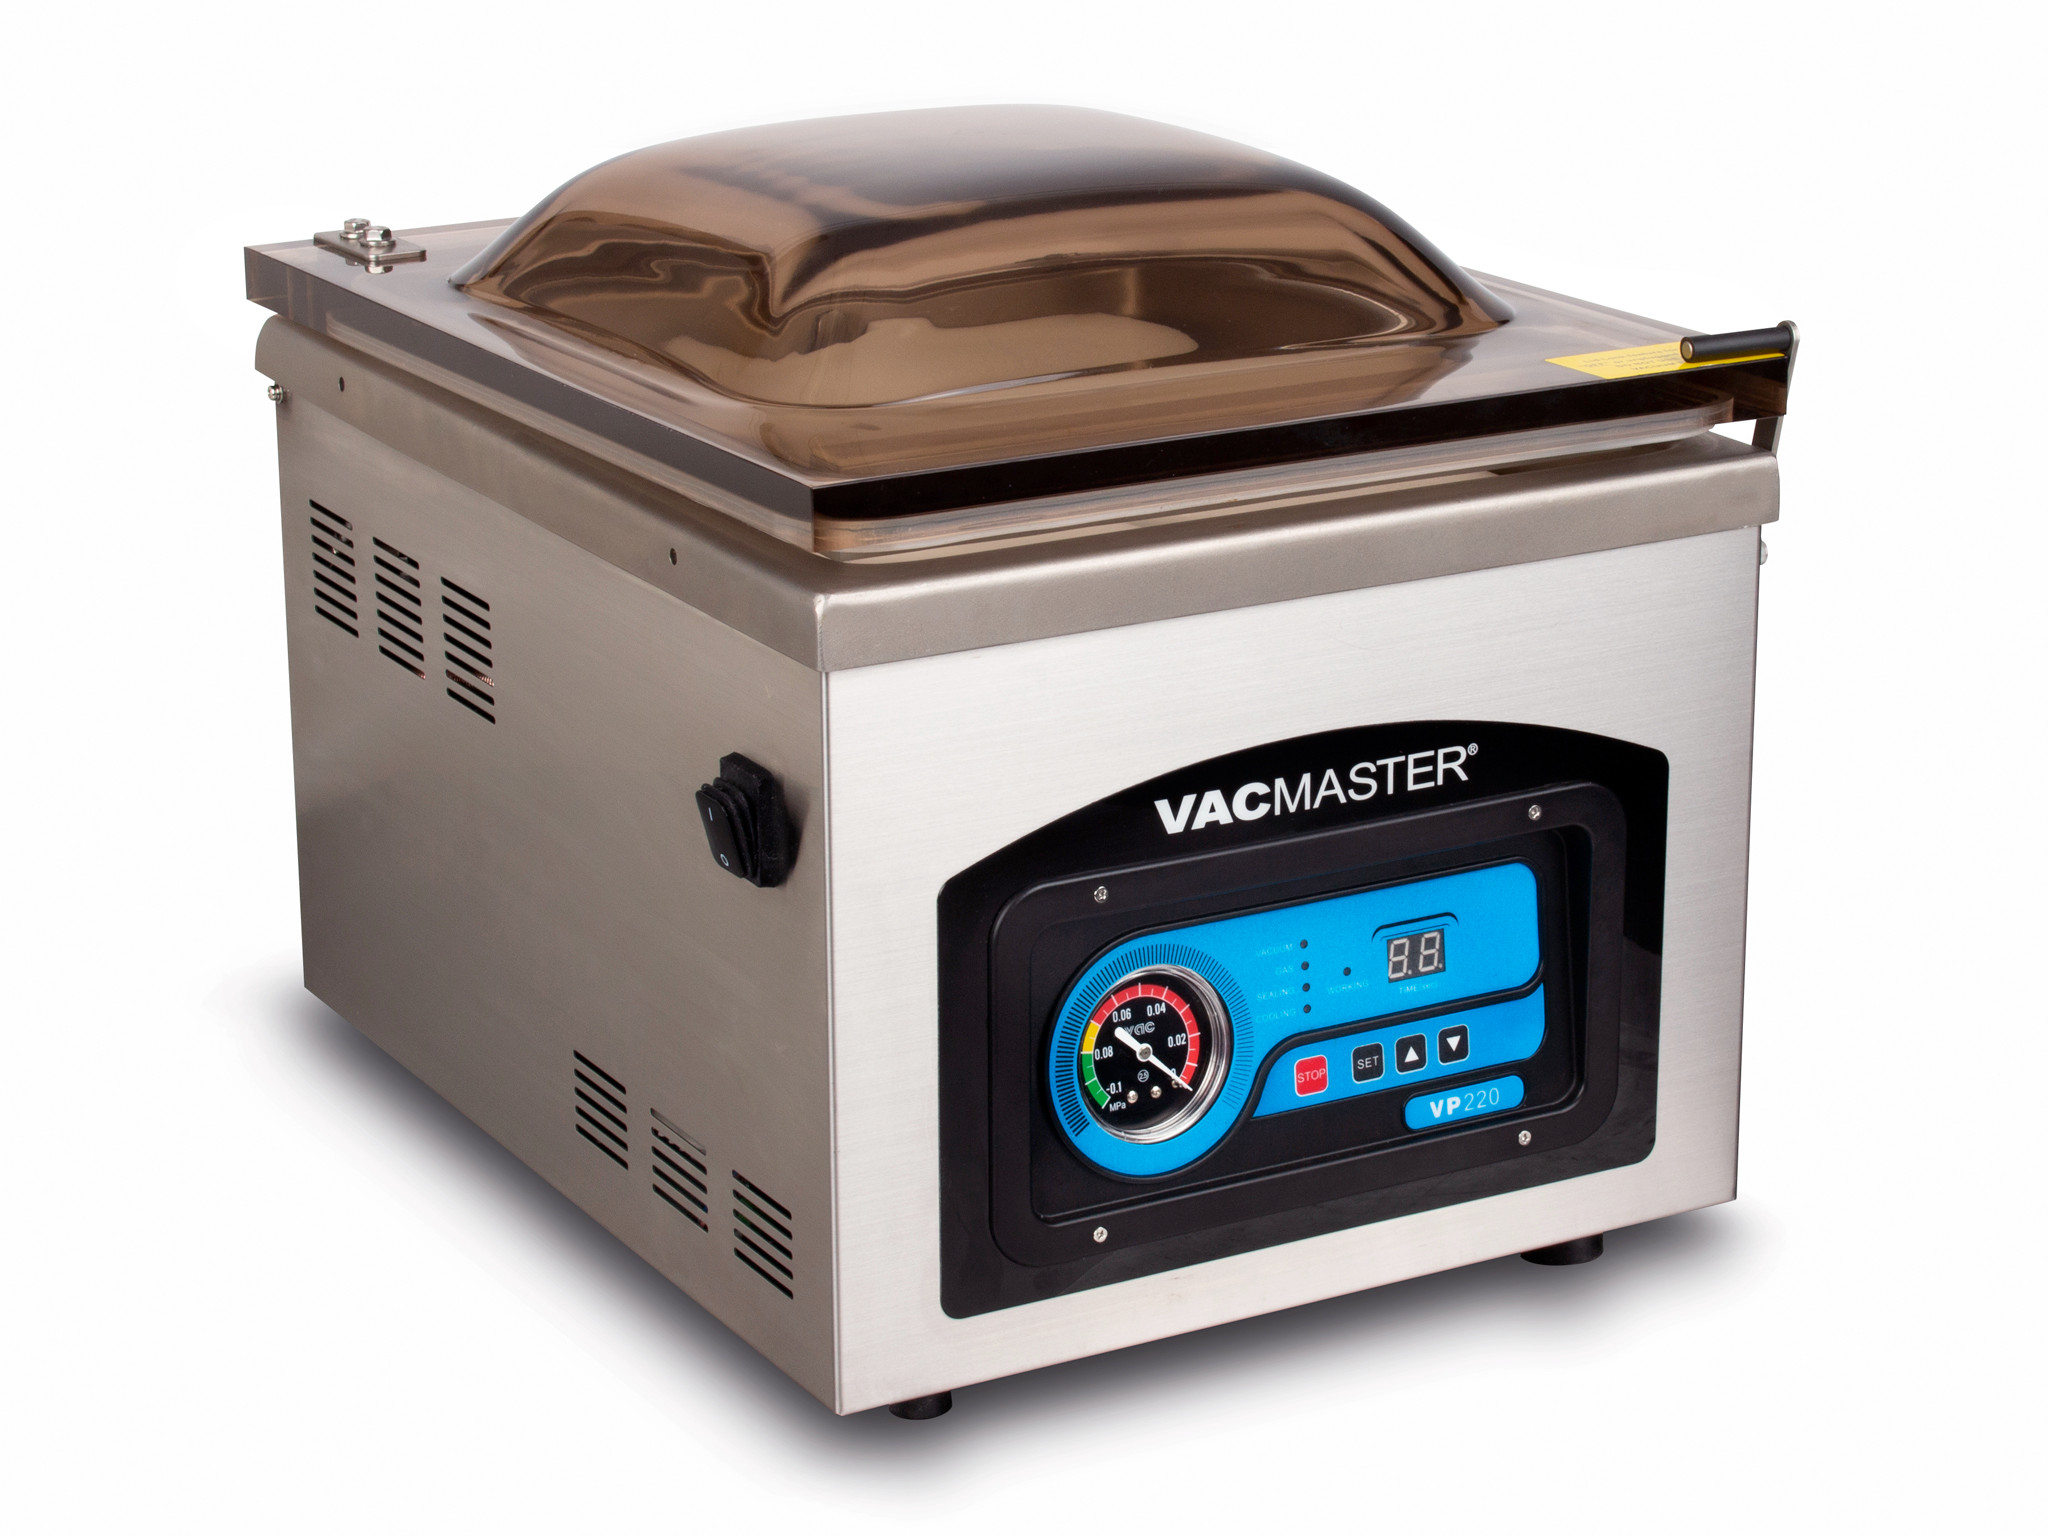 VacMaster VP220 Commercial Vacuum Sealer